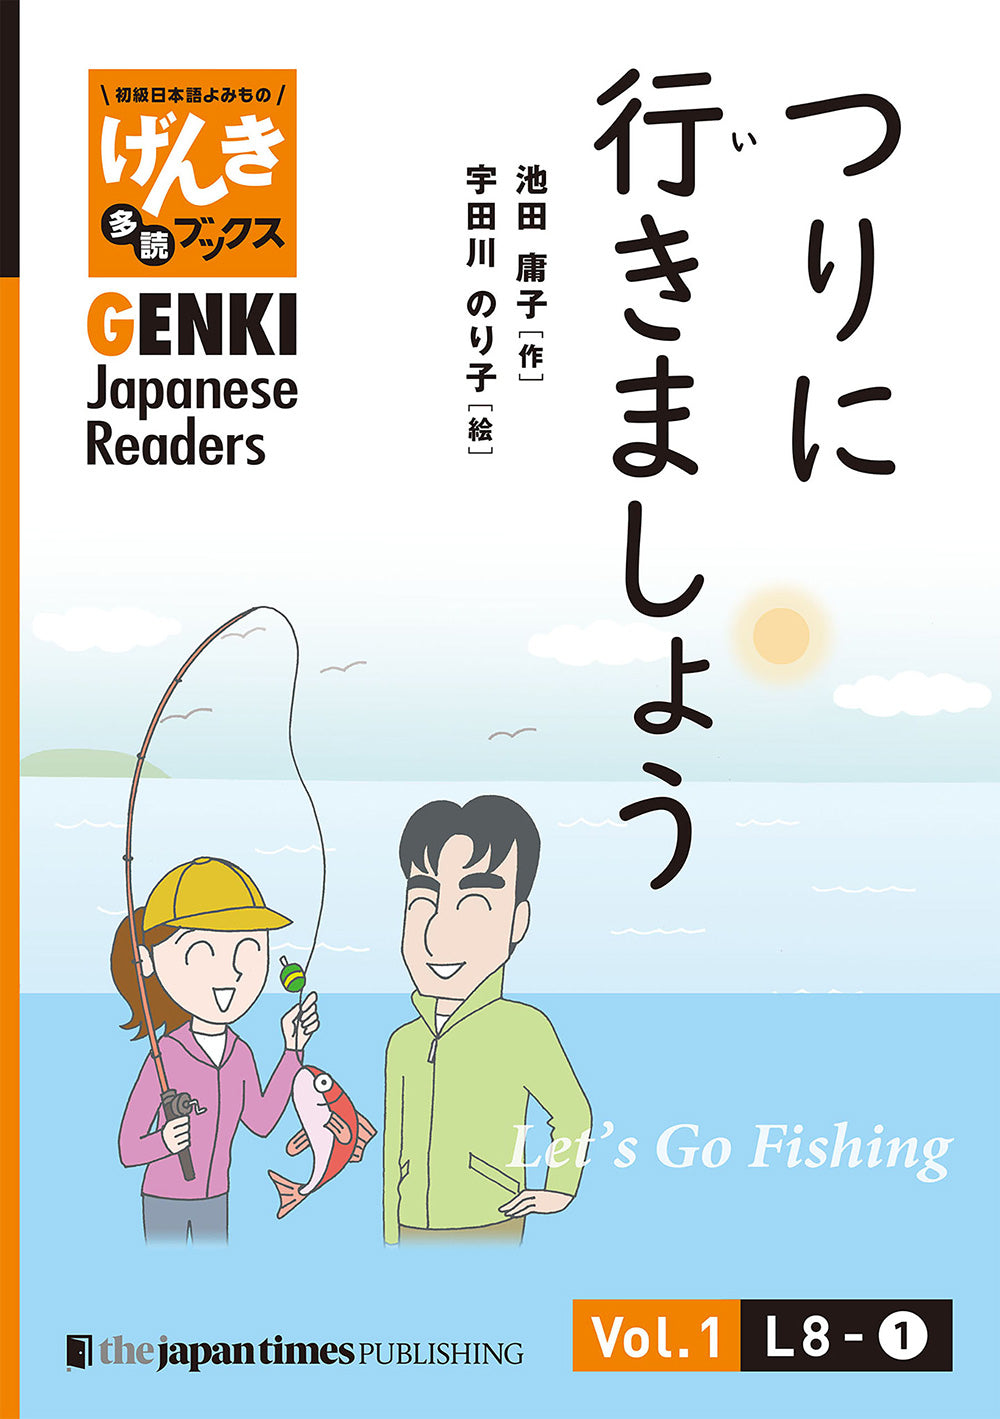 GENKI Japanese Readers Box 2 (L7-L12)